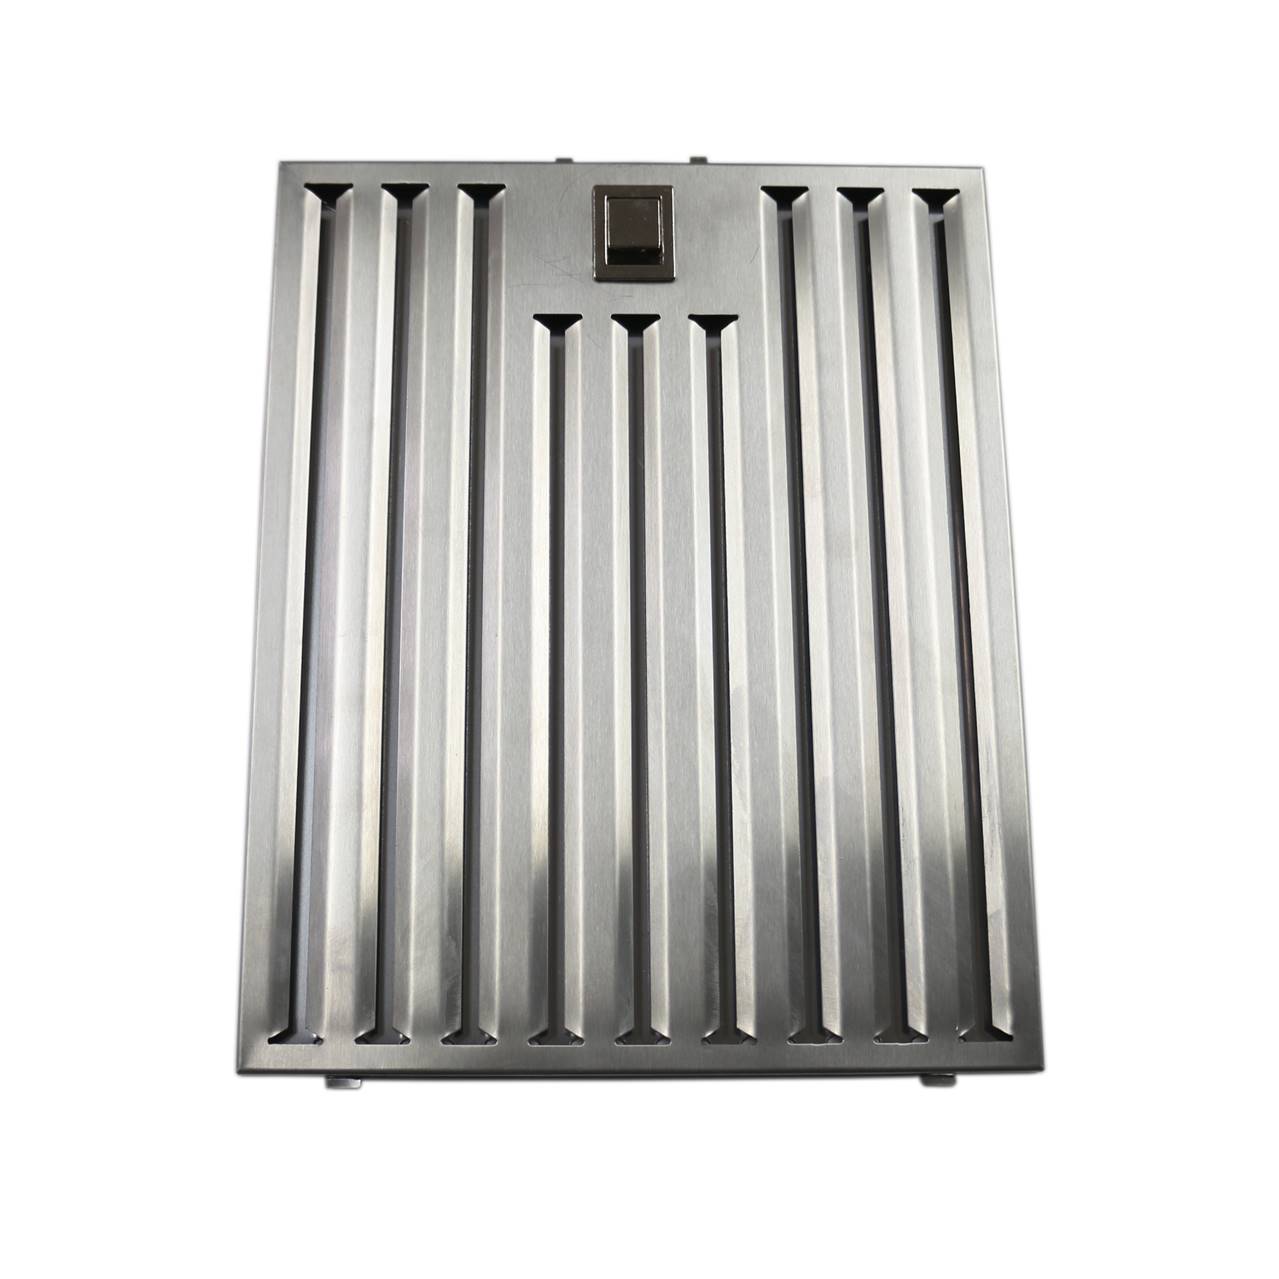 Awoco Stainless Steel Baffle Filter for Awoco 36" RH-C06-36, RH-R06-36, RH-SP-36 Range Hoods